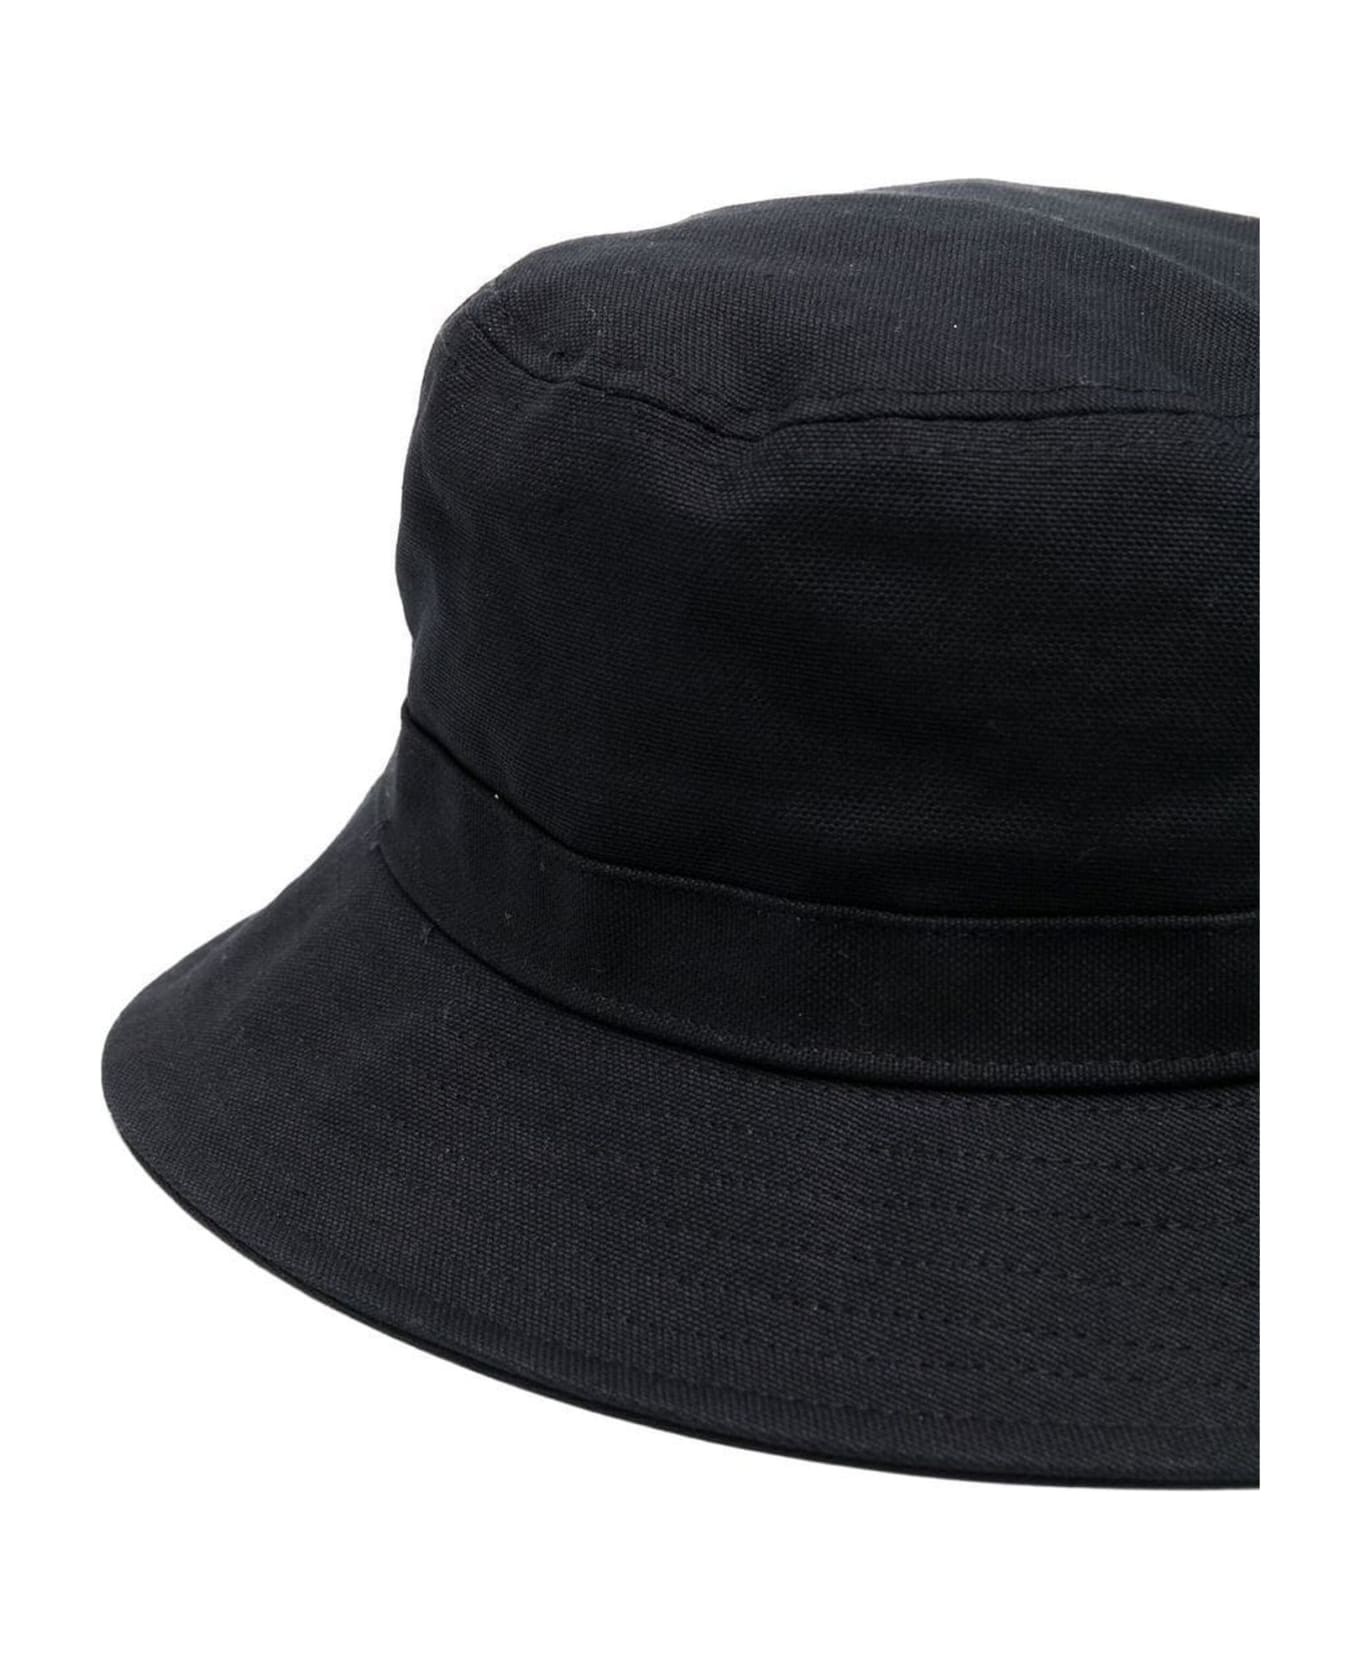 Carhartt Hats Black - Black